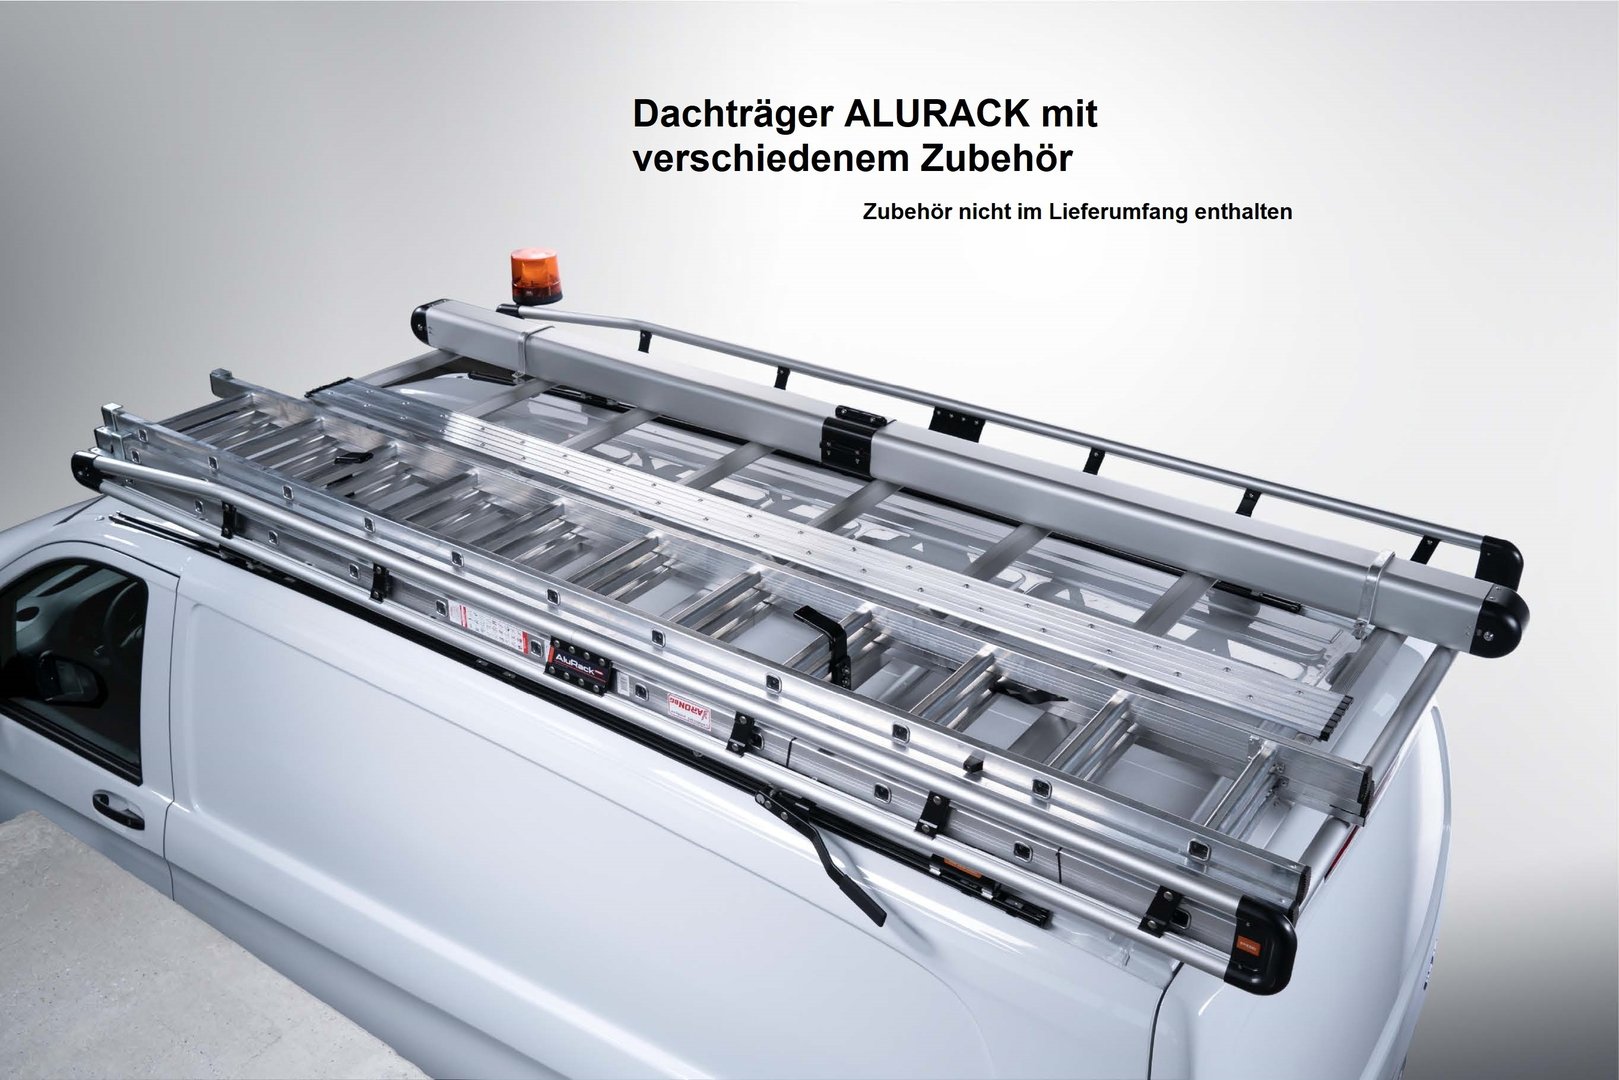 Prime Design AluRack Dachträger Berlingo - Partner -Combo ab 2018